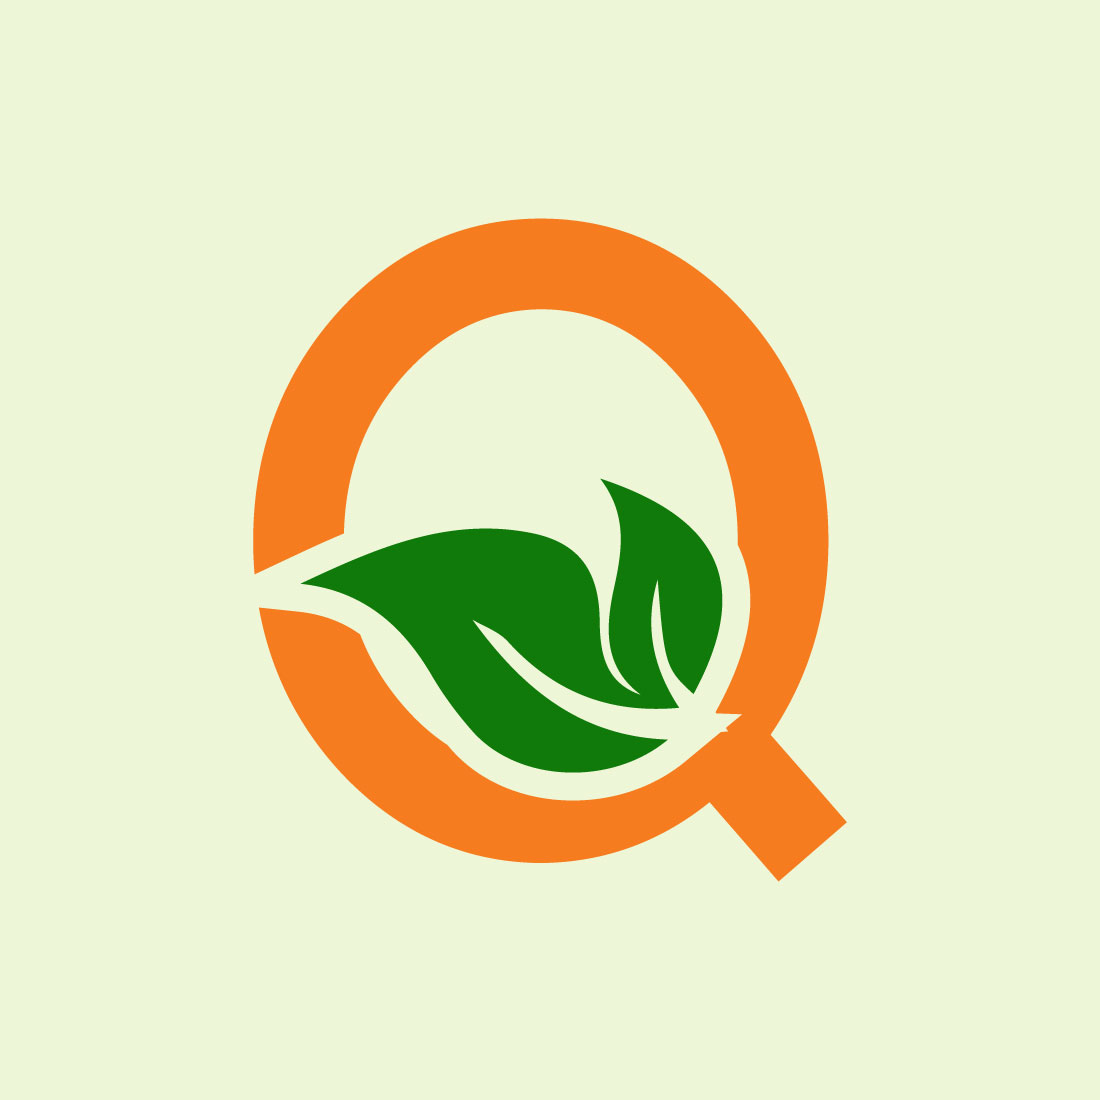 Free Q retro typography logo cover image.